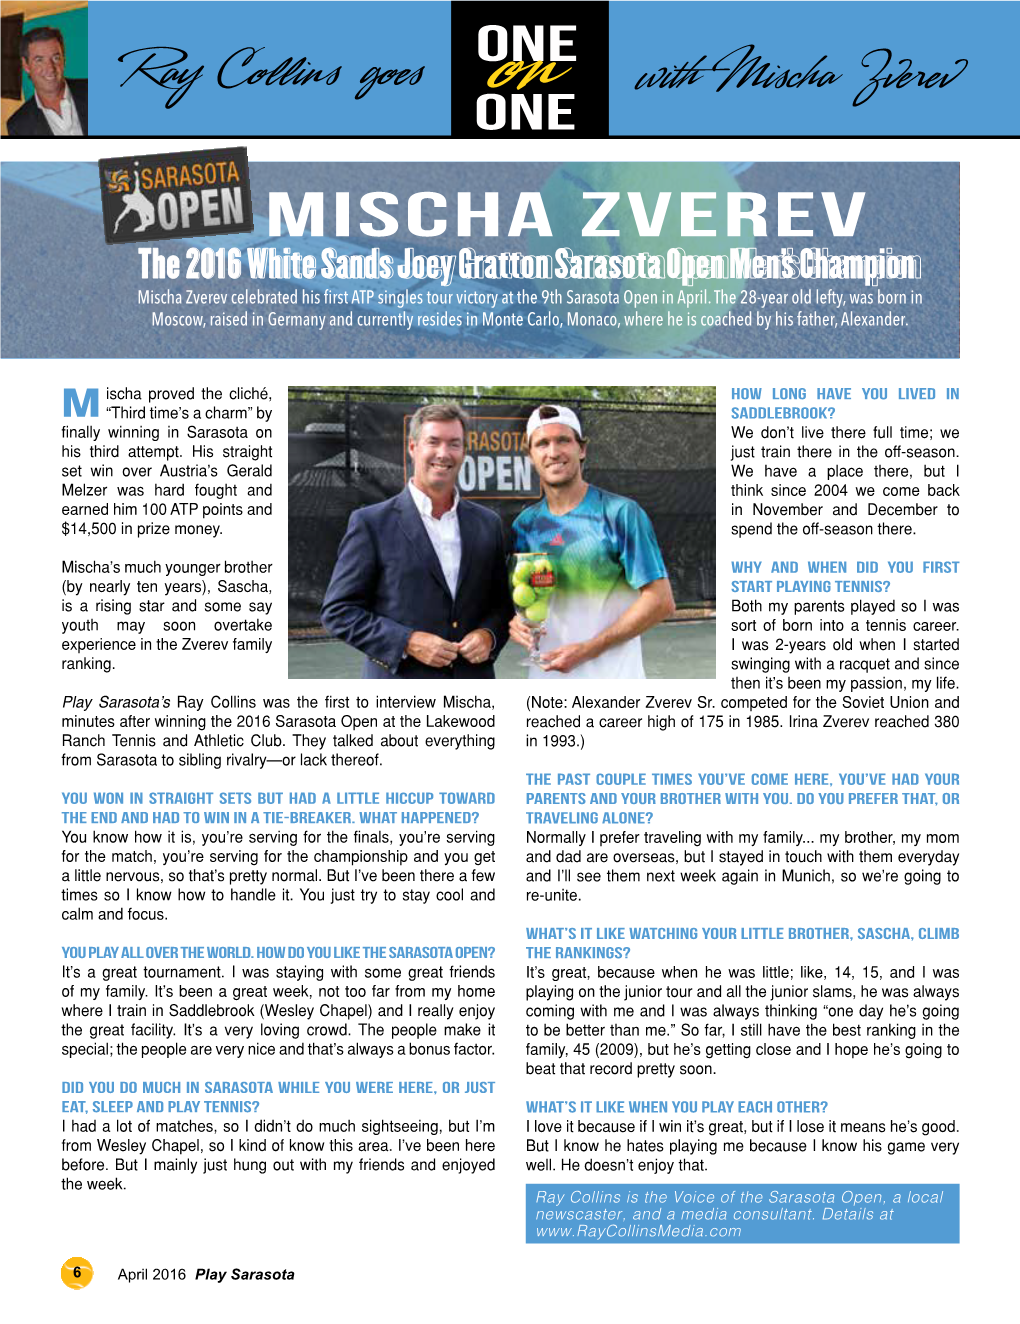 One-On-One with Mischa Zverev